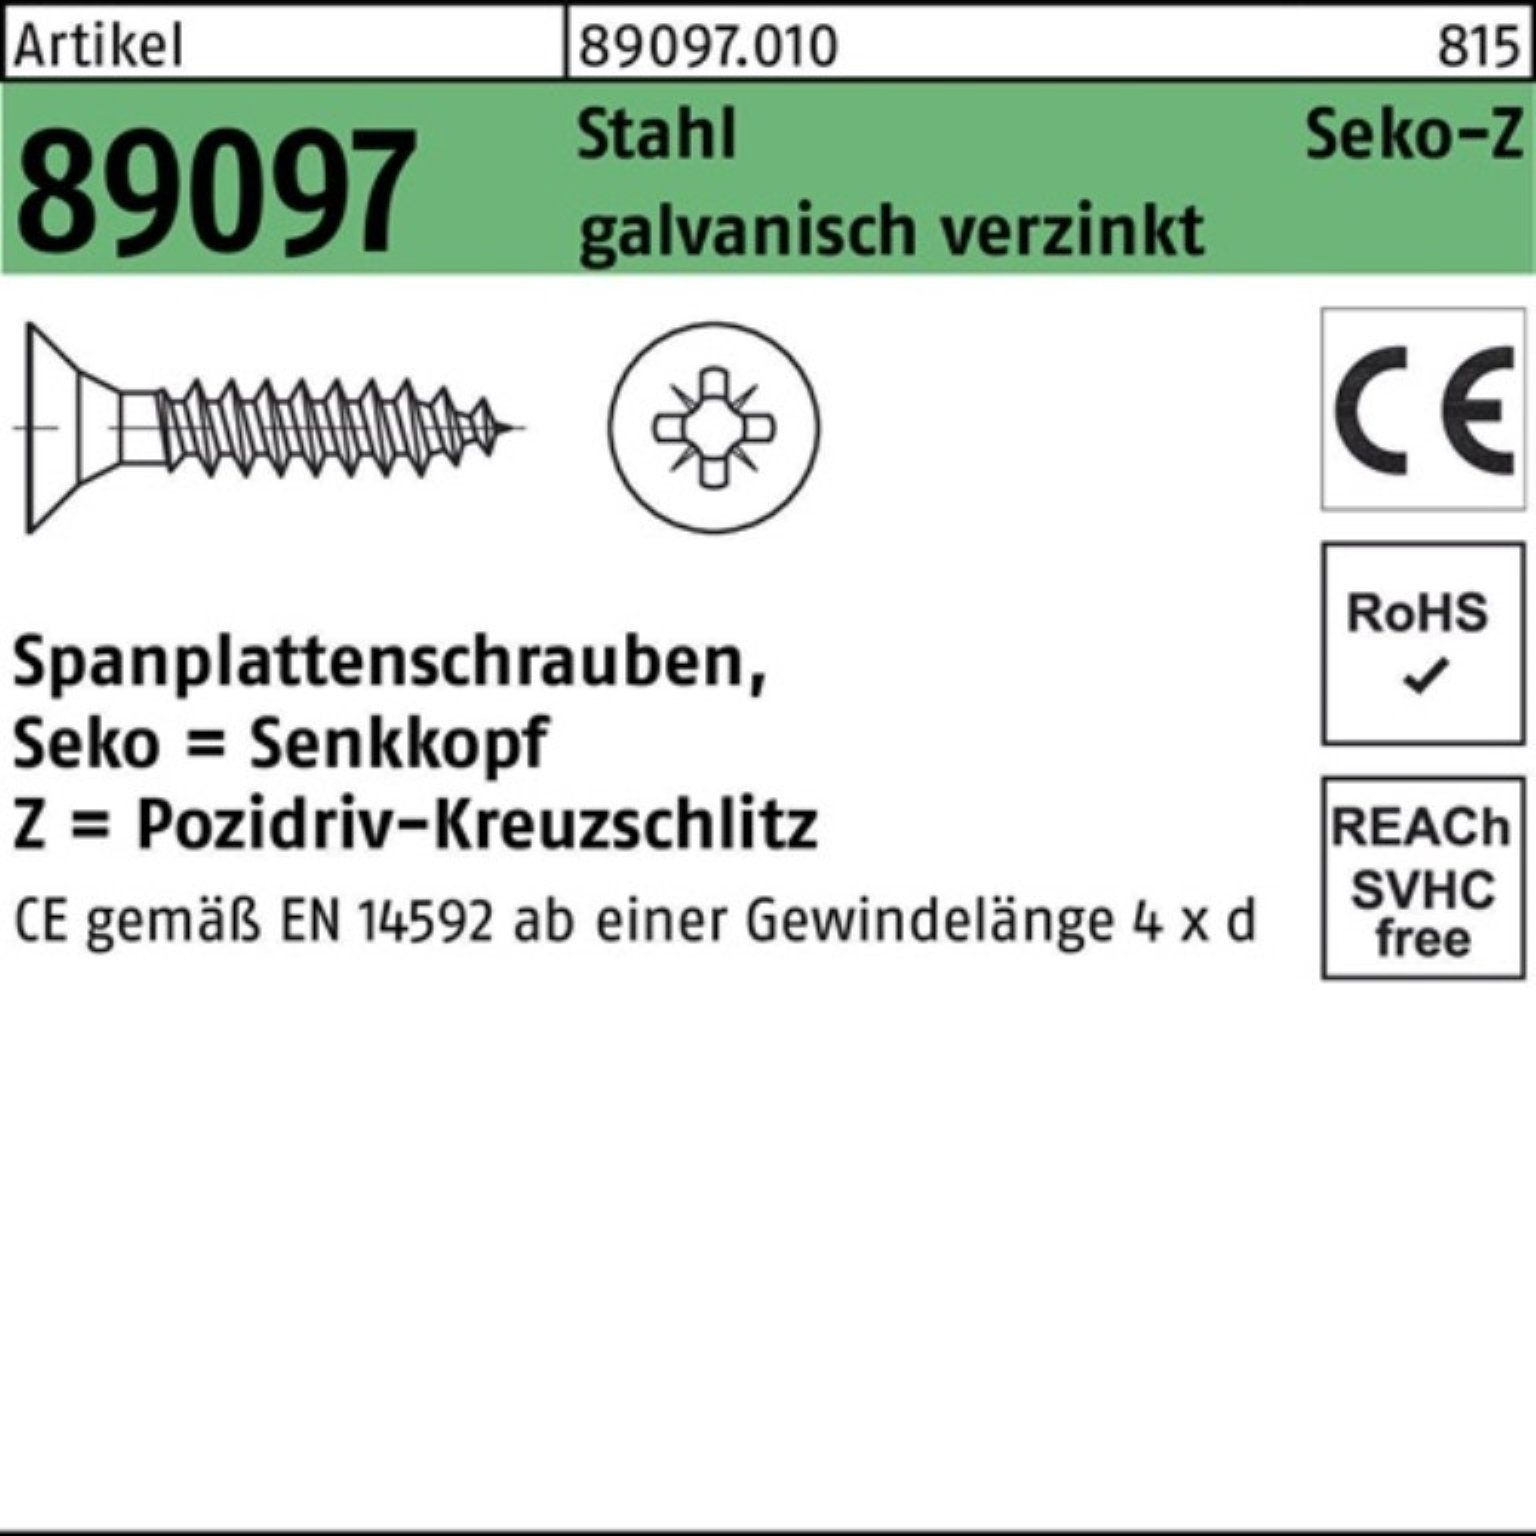 Reyher Spanplattenschraube 1000er Pack Spanplattenschraube 4x20-Z galv.v VG SEKO PZ 89097 R Stahl